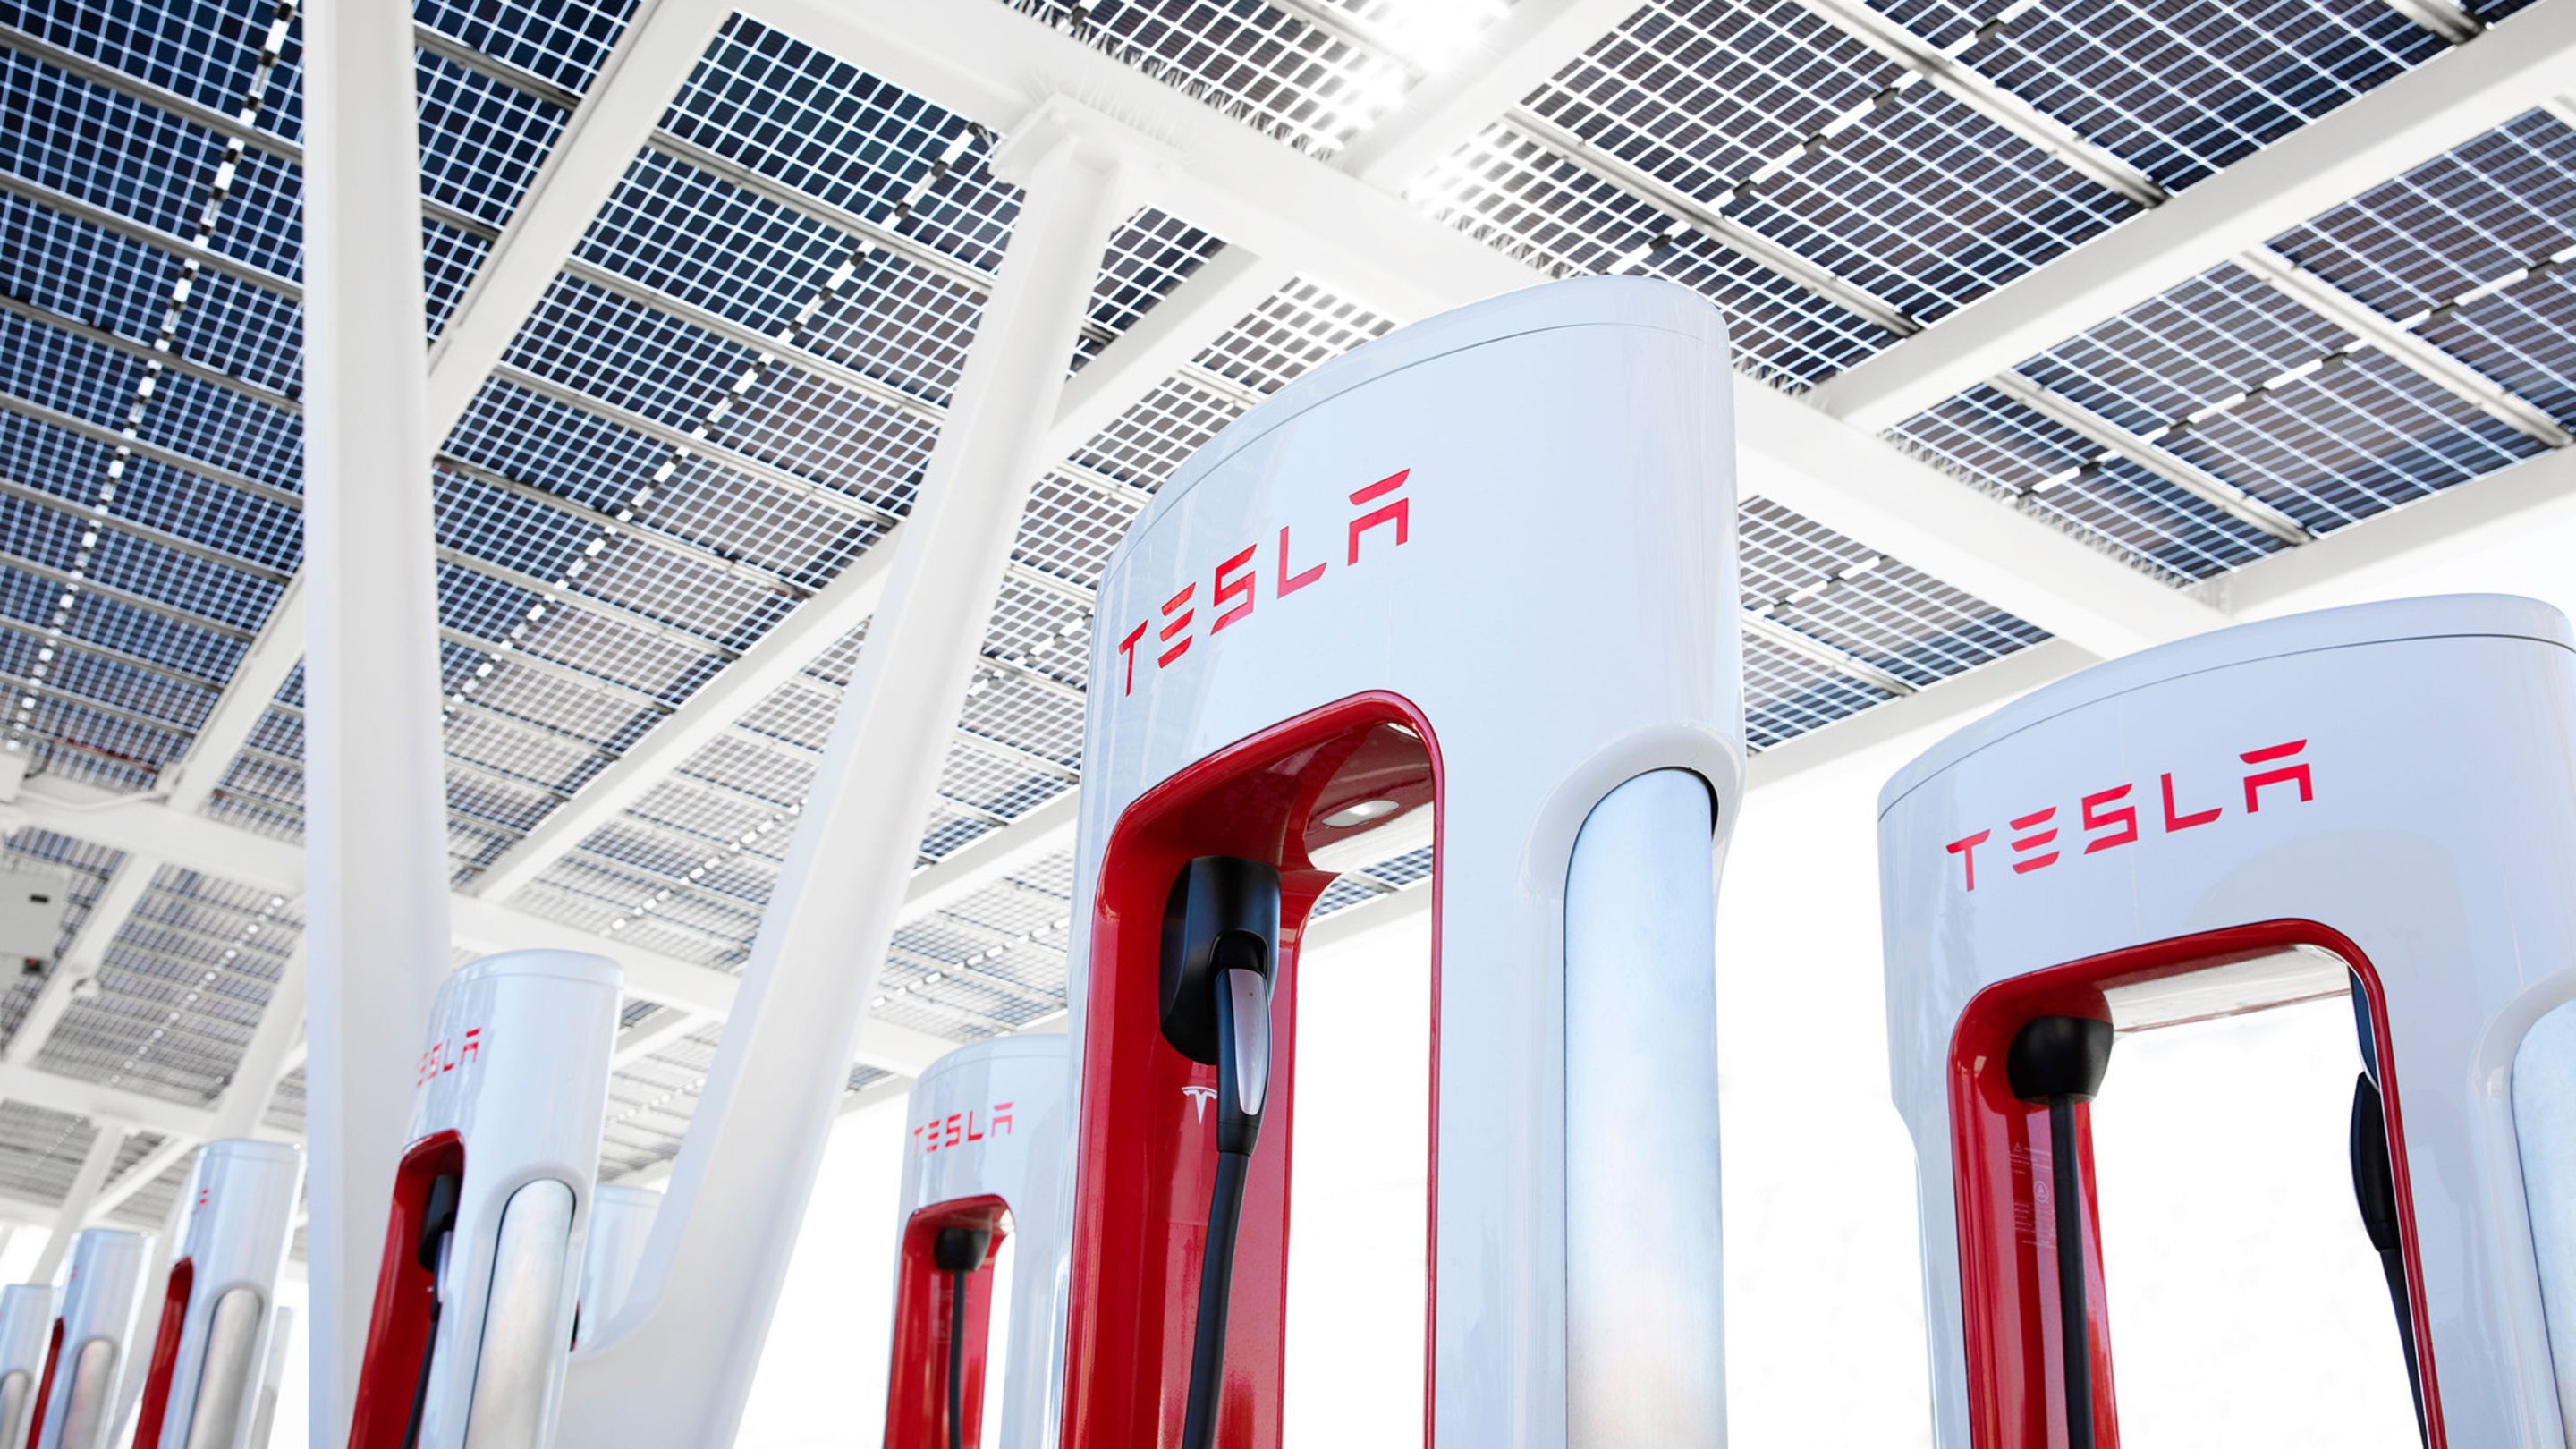 Fila de Superchargers Tesla